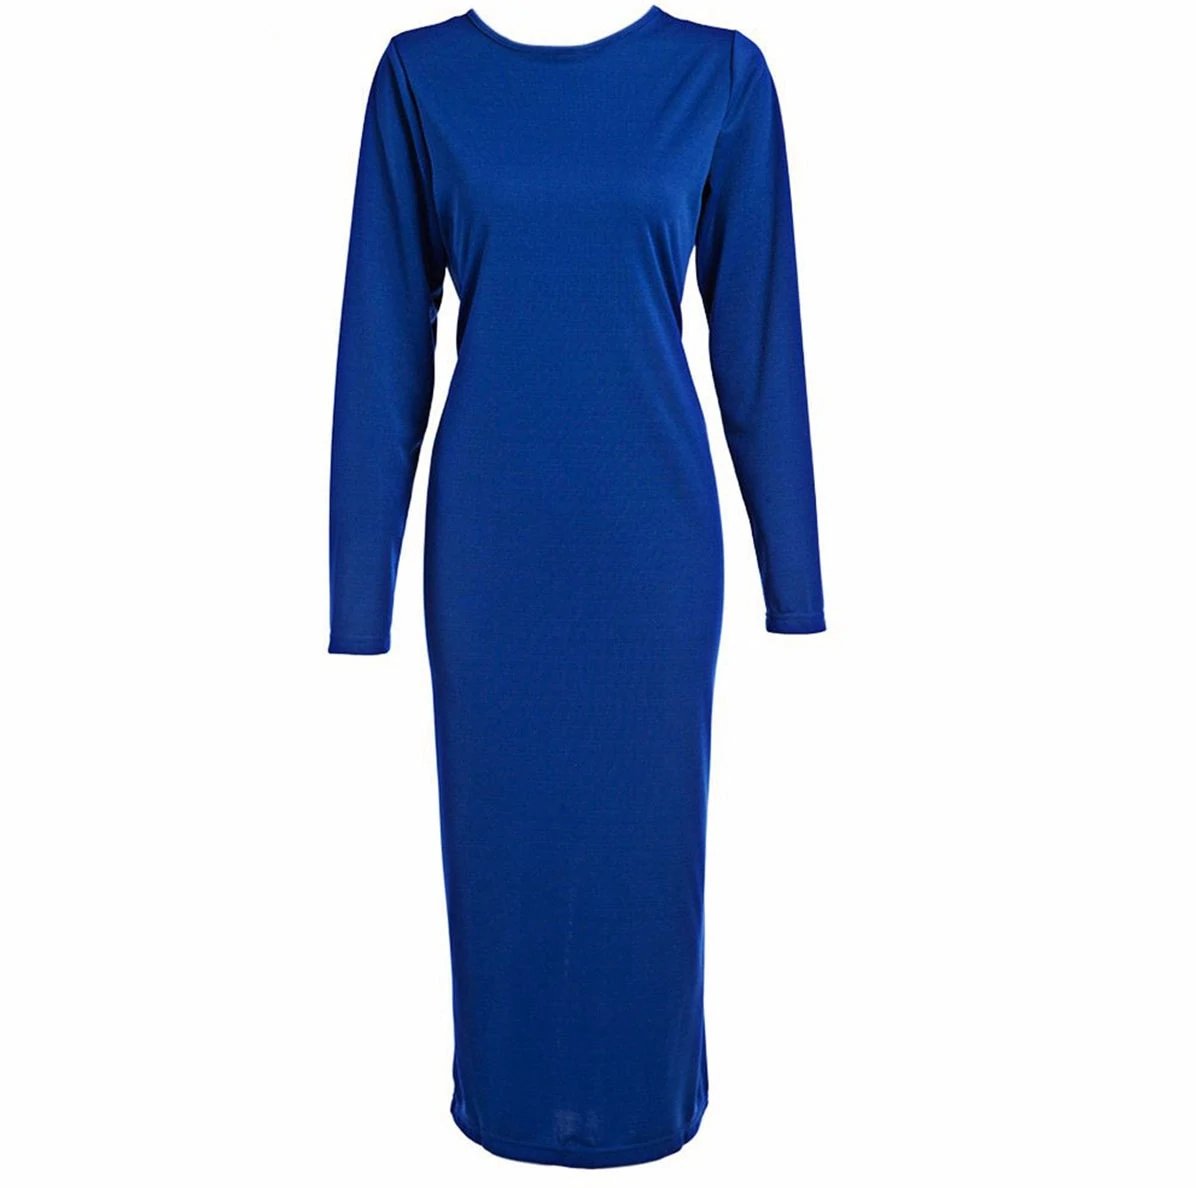 M0185 blue7 Office Evening Dresses maureens.com boutique